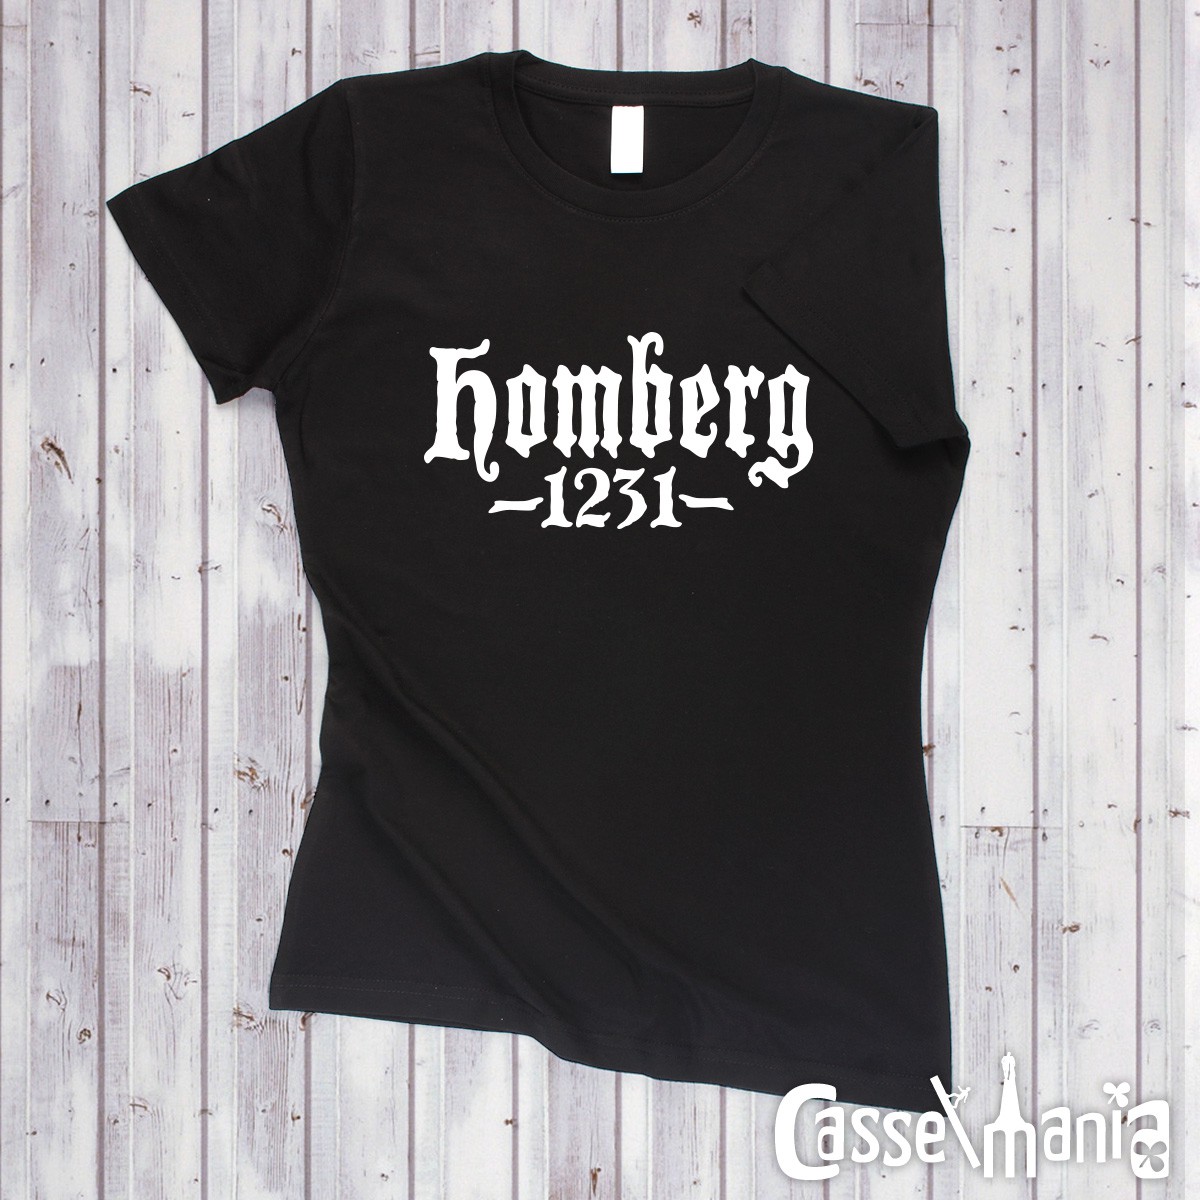 Homberg - 1231, für Mäjen